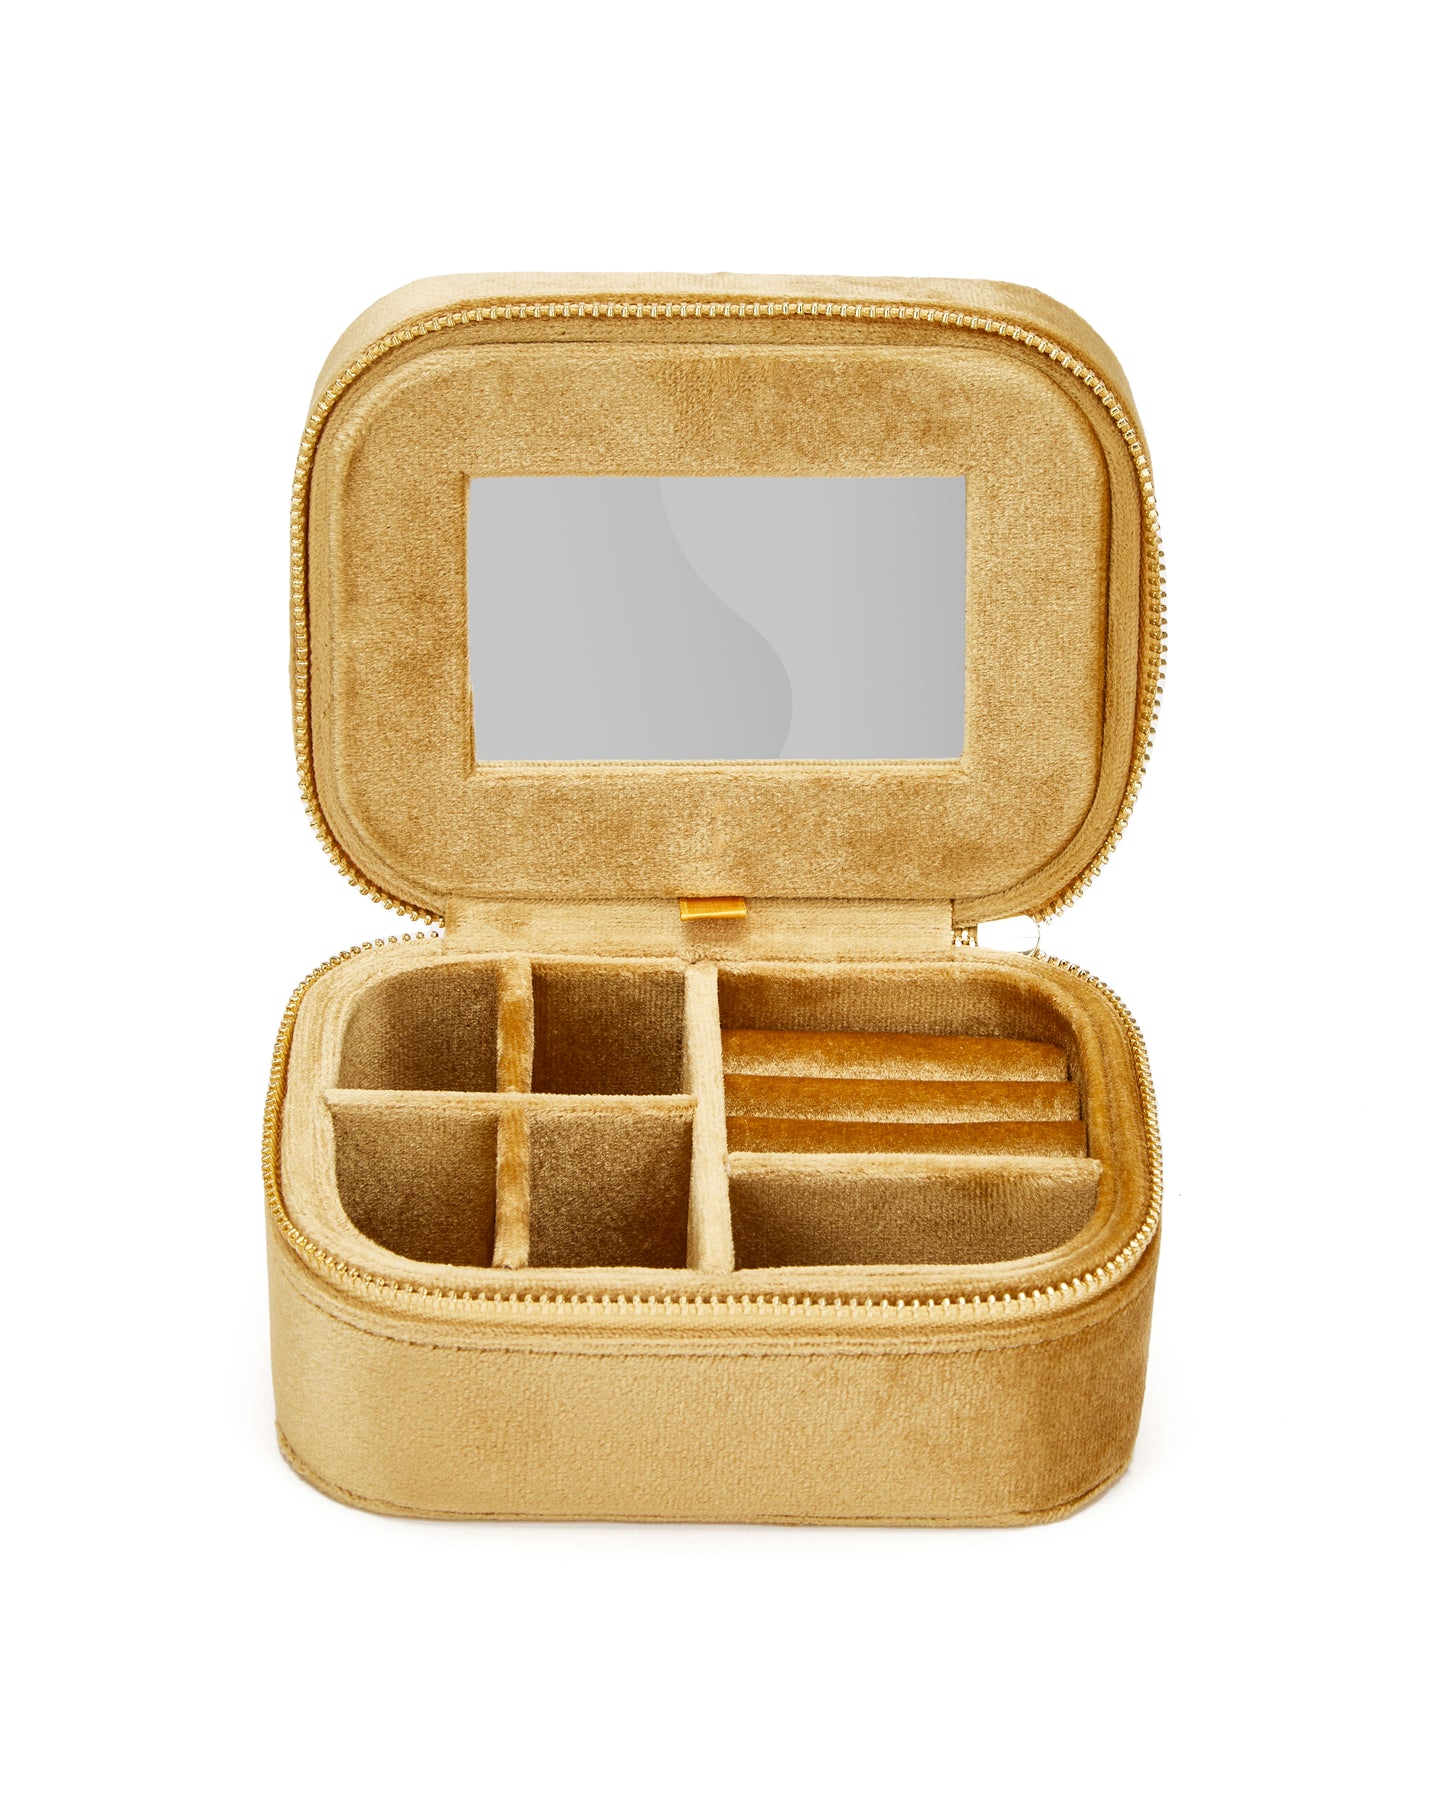 Jewelry box AMBER, 10 pieces